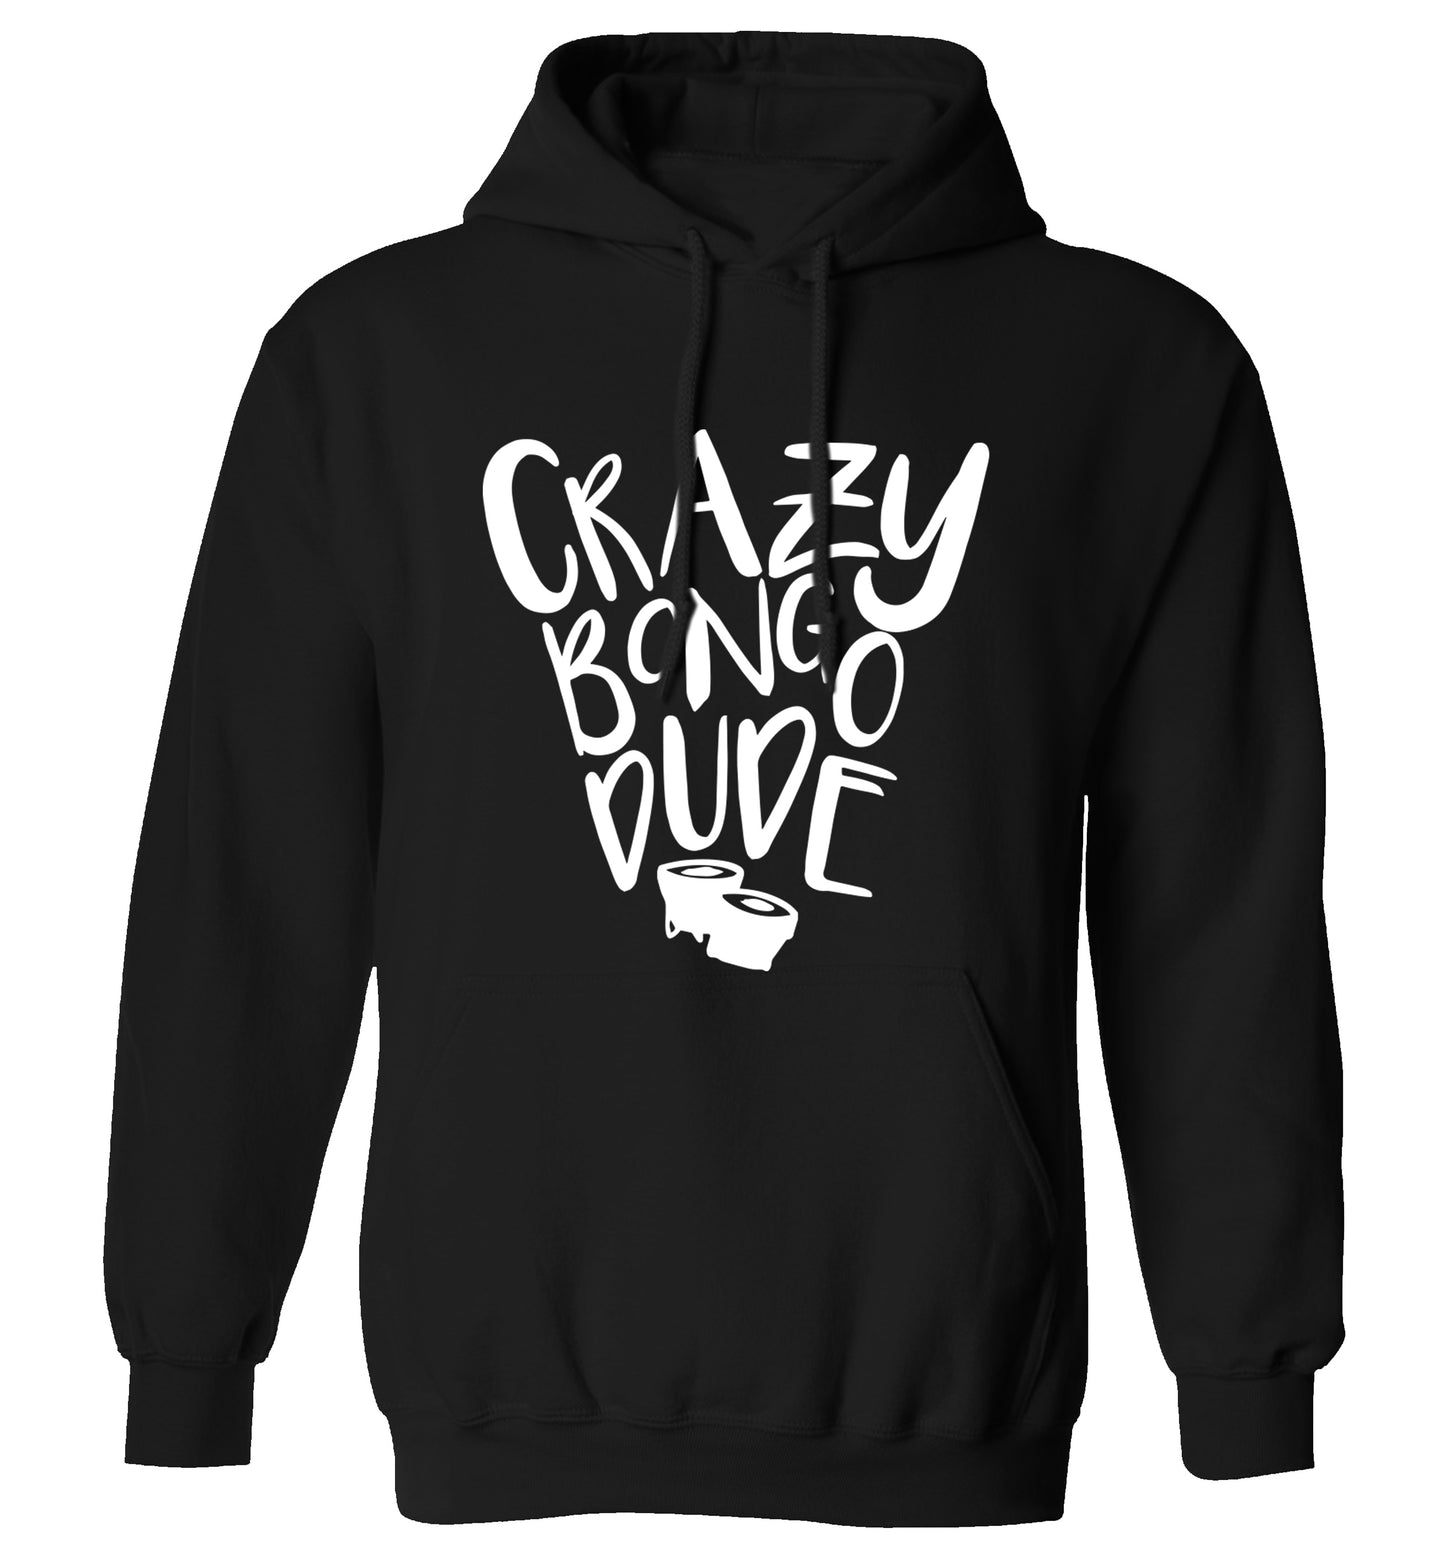 Crazy bongo dude adults unisex black hoodie 2XL